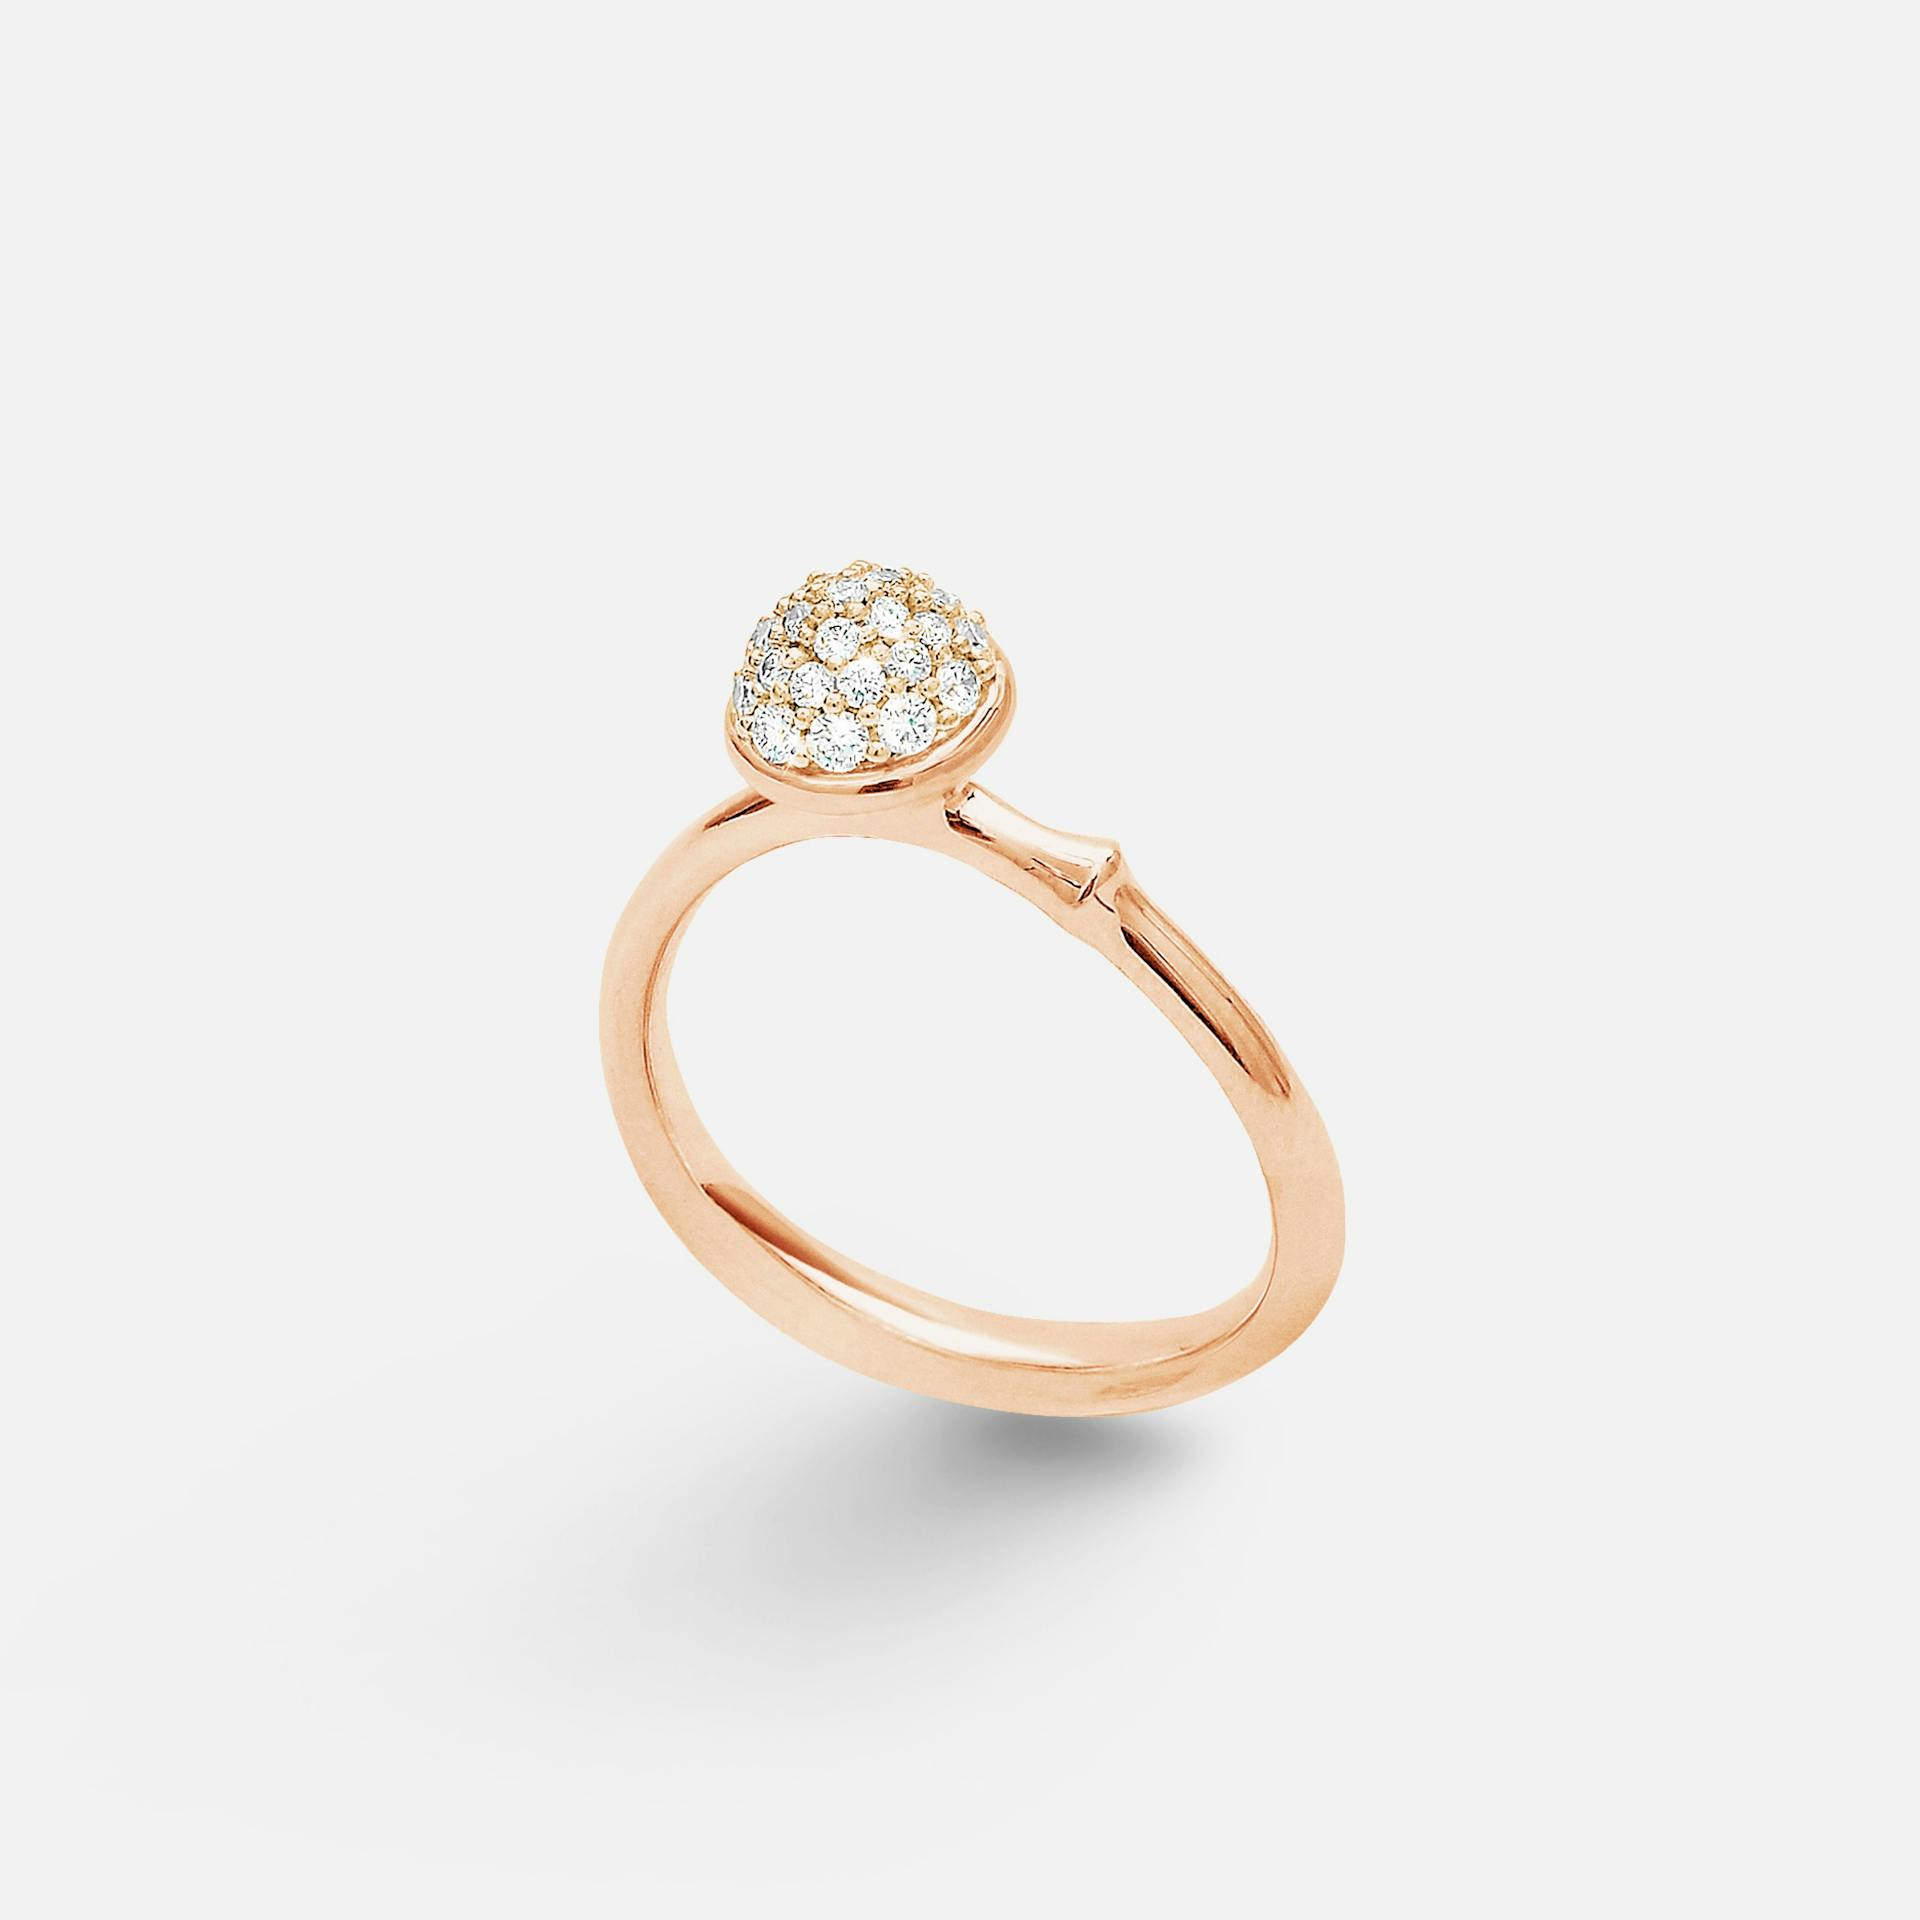 Lotus Ring Small in 18 Karat Rose Gold with Diamonds  |  Ole Lynggaard Copenhagen